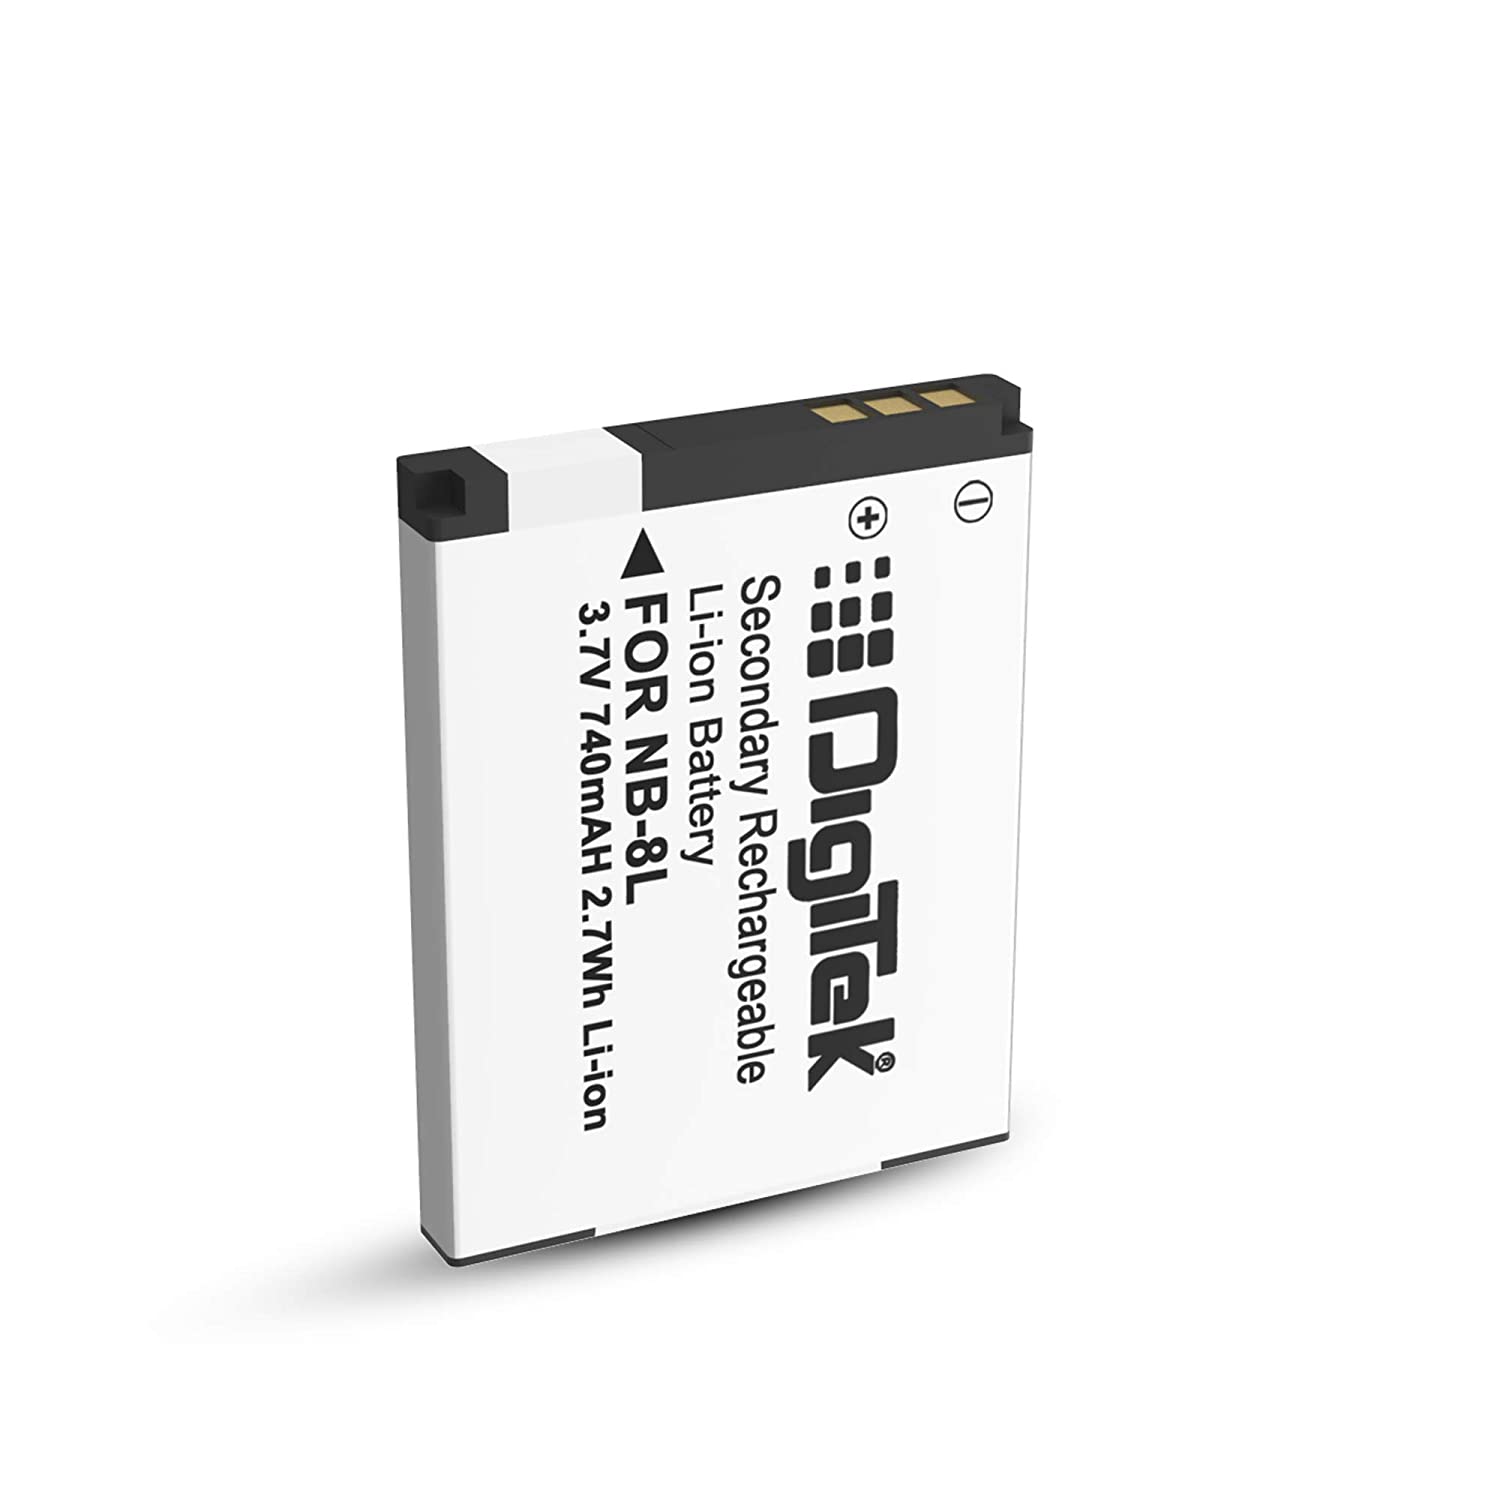 Tyfy (LP E8) Lithium-ion Rechargeable Battery for DSLR Camera, Compatibility - Power EOS 55D, 600D, D650, 700D, EOS KISSX4, EOS Rebel T2i, T3i, T4i & T5i (6 month warranty)-Camera Batteries-dealsplant